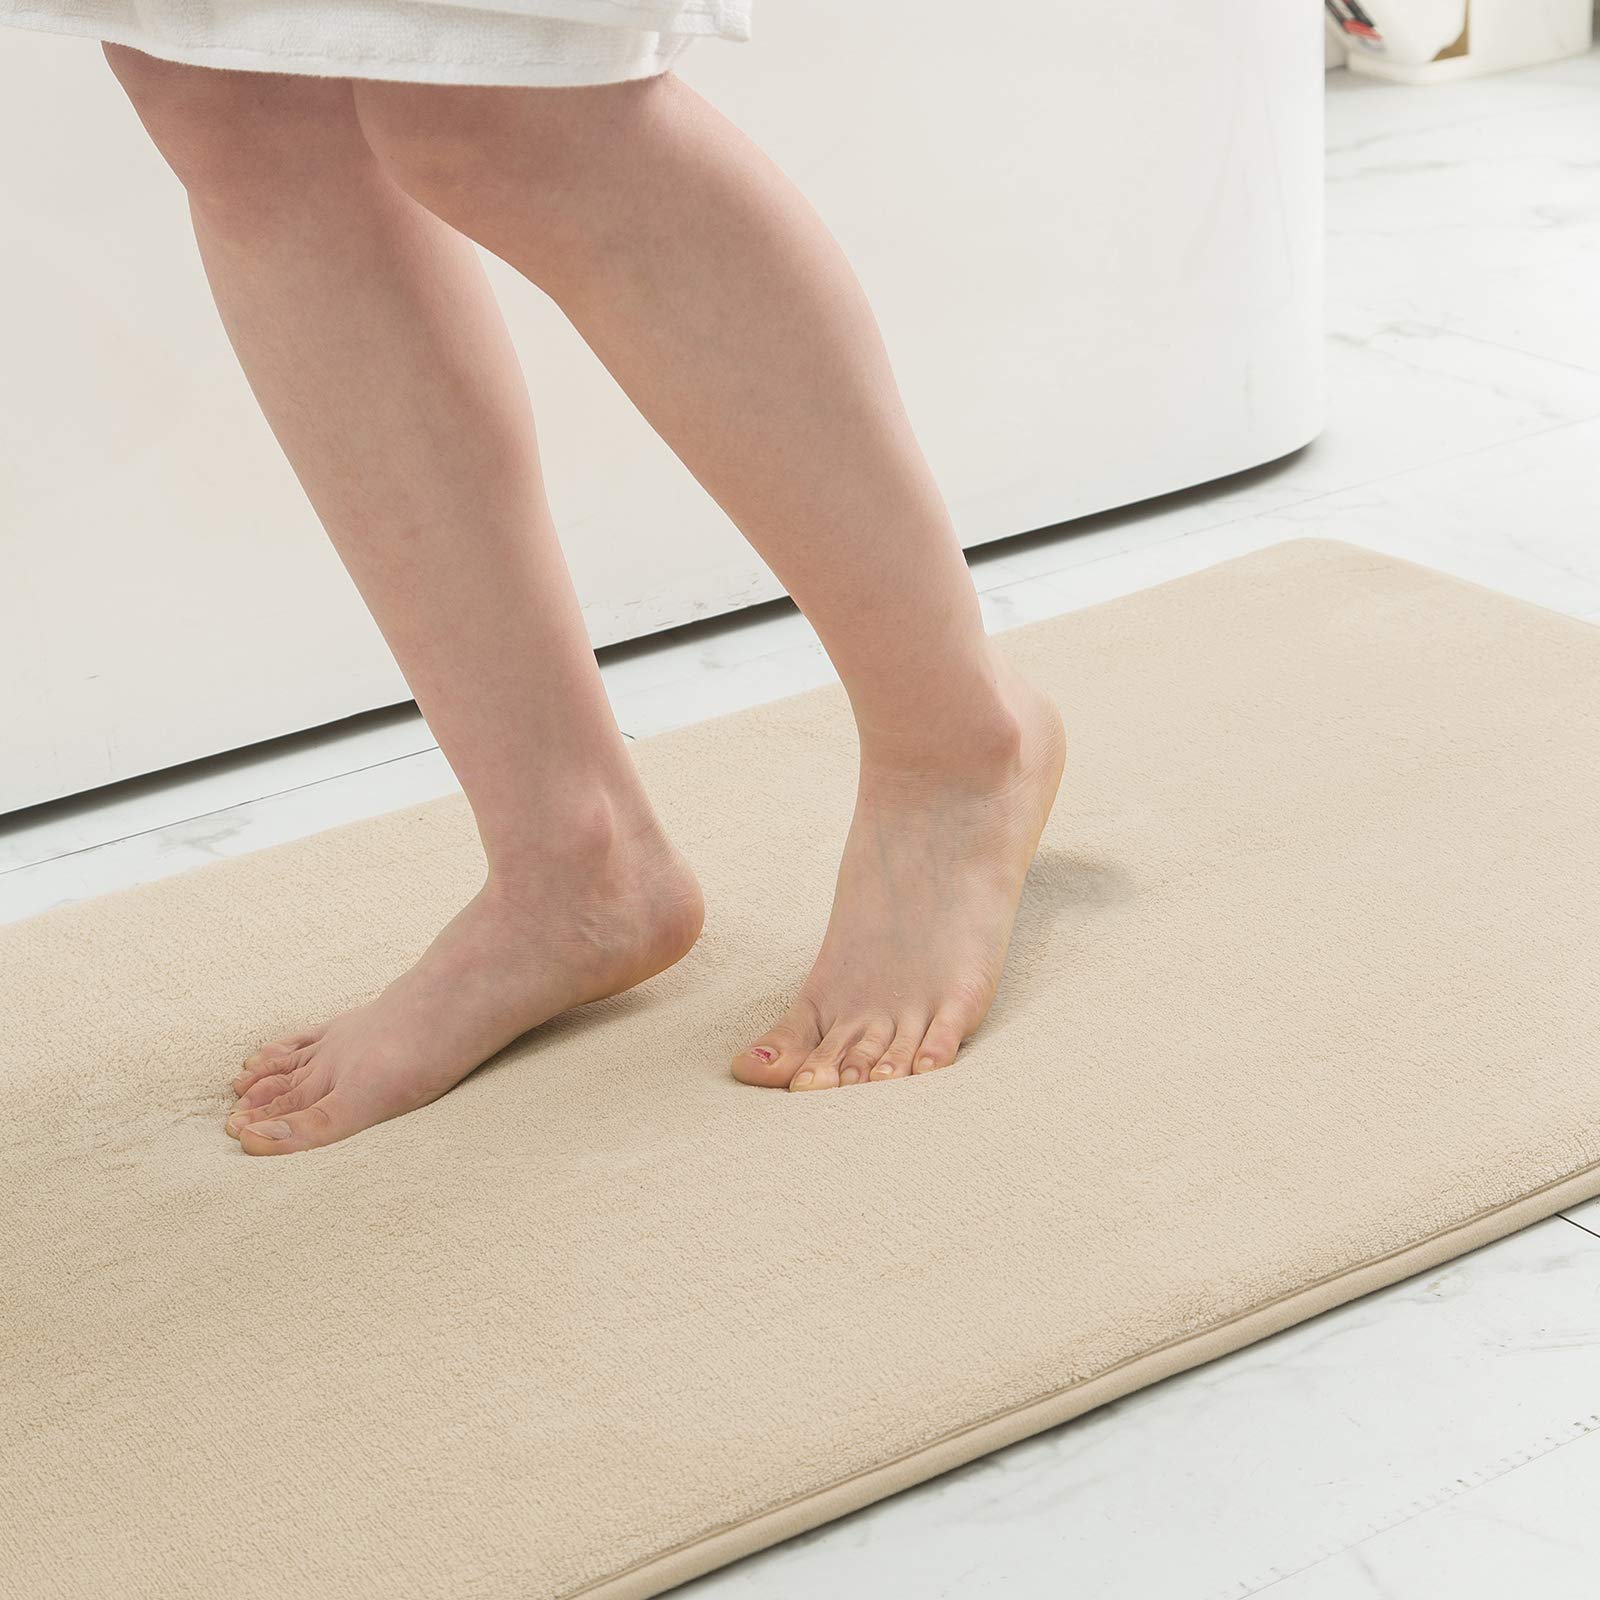 Memory Foam Bath Mat Anti-Slip Shower Carpet Soft Foot Pad Decoration Floor Protector Absorbent Quick Dry Bathroom Rug Mats & Rugs DailyAlertDeals 43x61cm(17x24inch) China beige